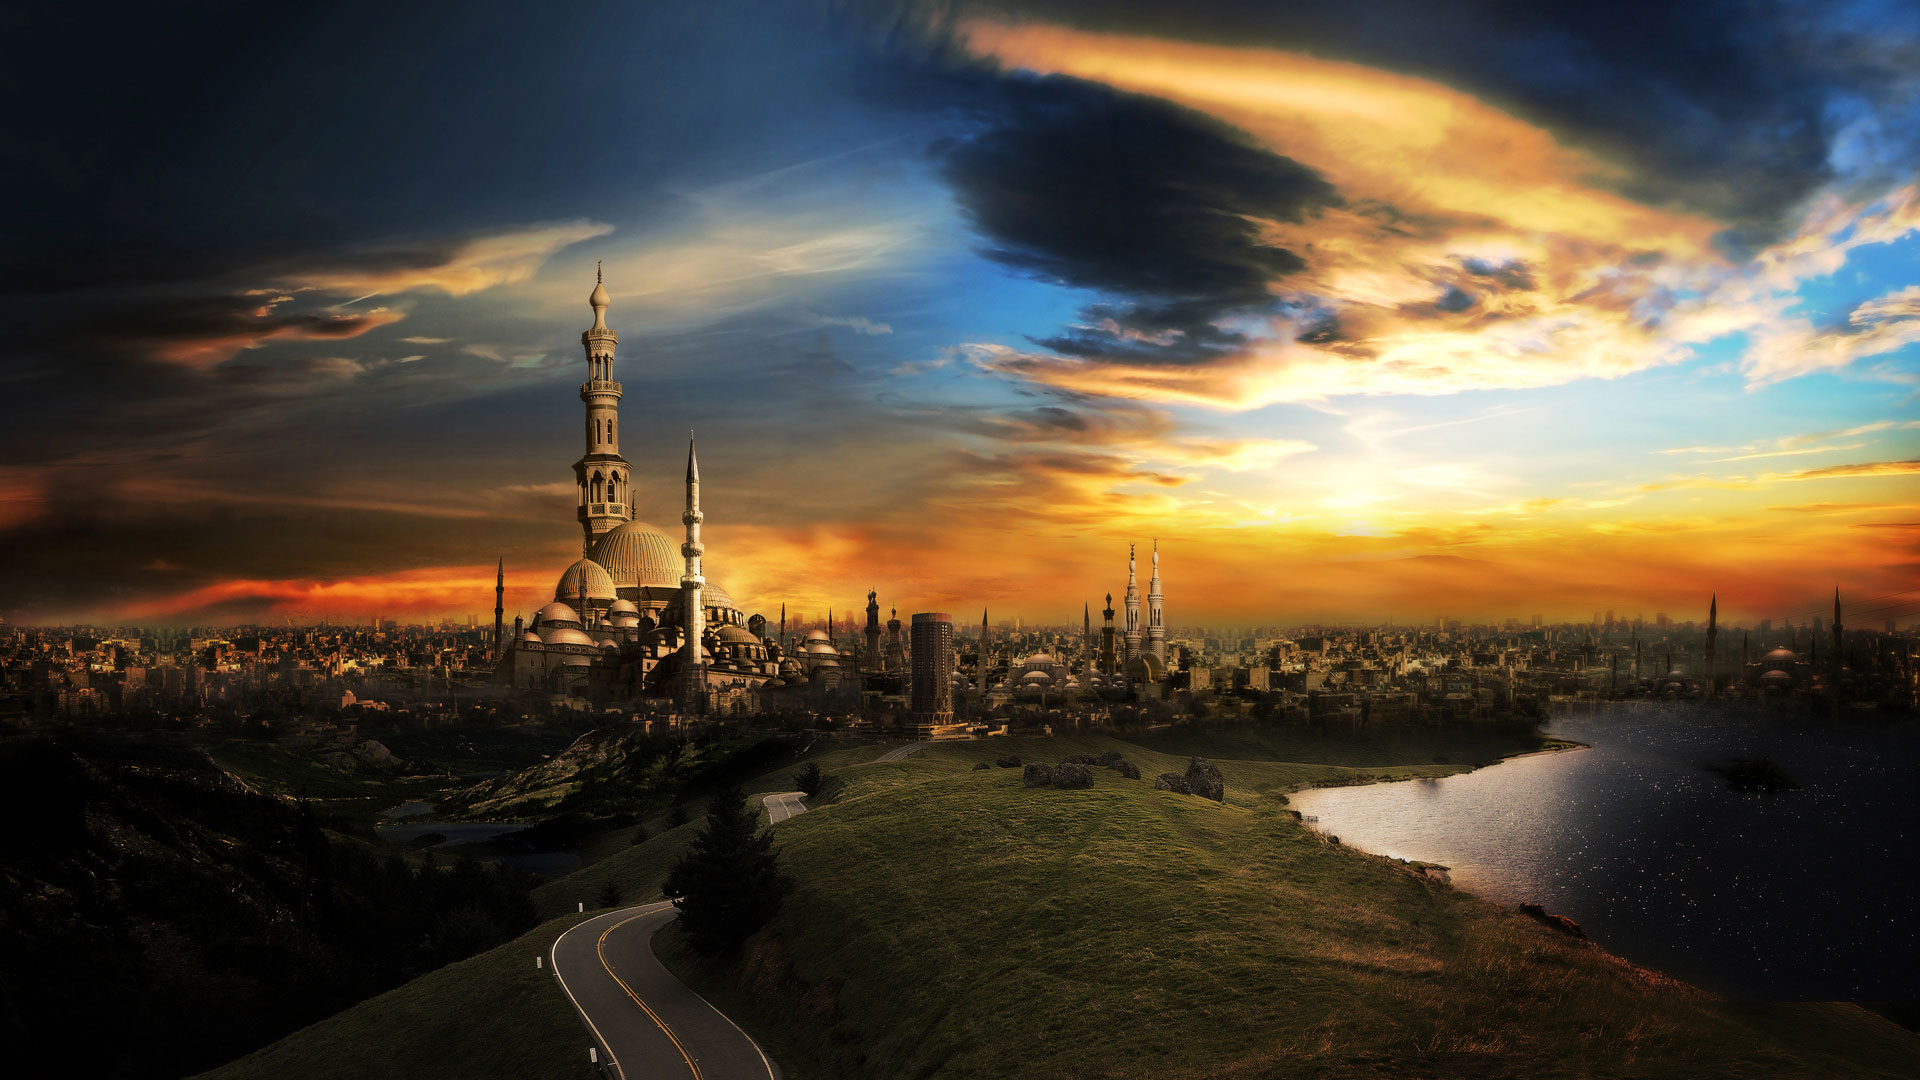 islam, man made, cgi, road, landscape, lake, city, cairo, sky, cloud, sunset